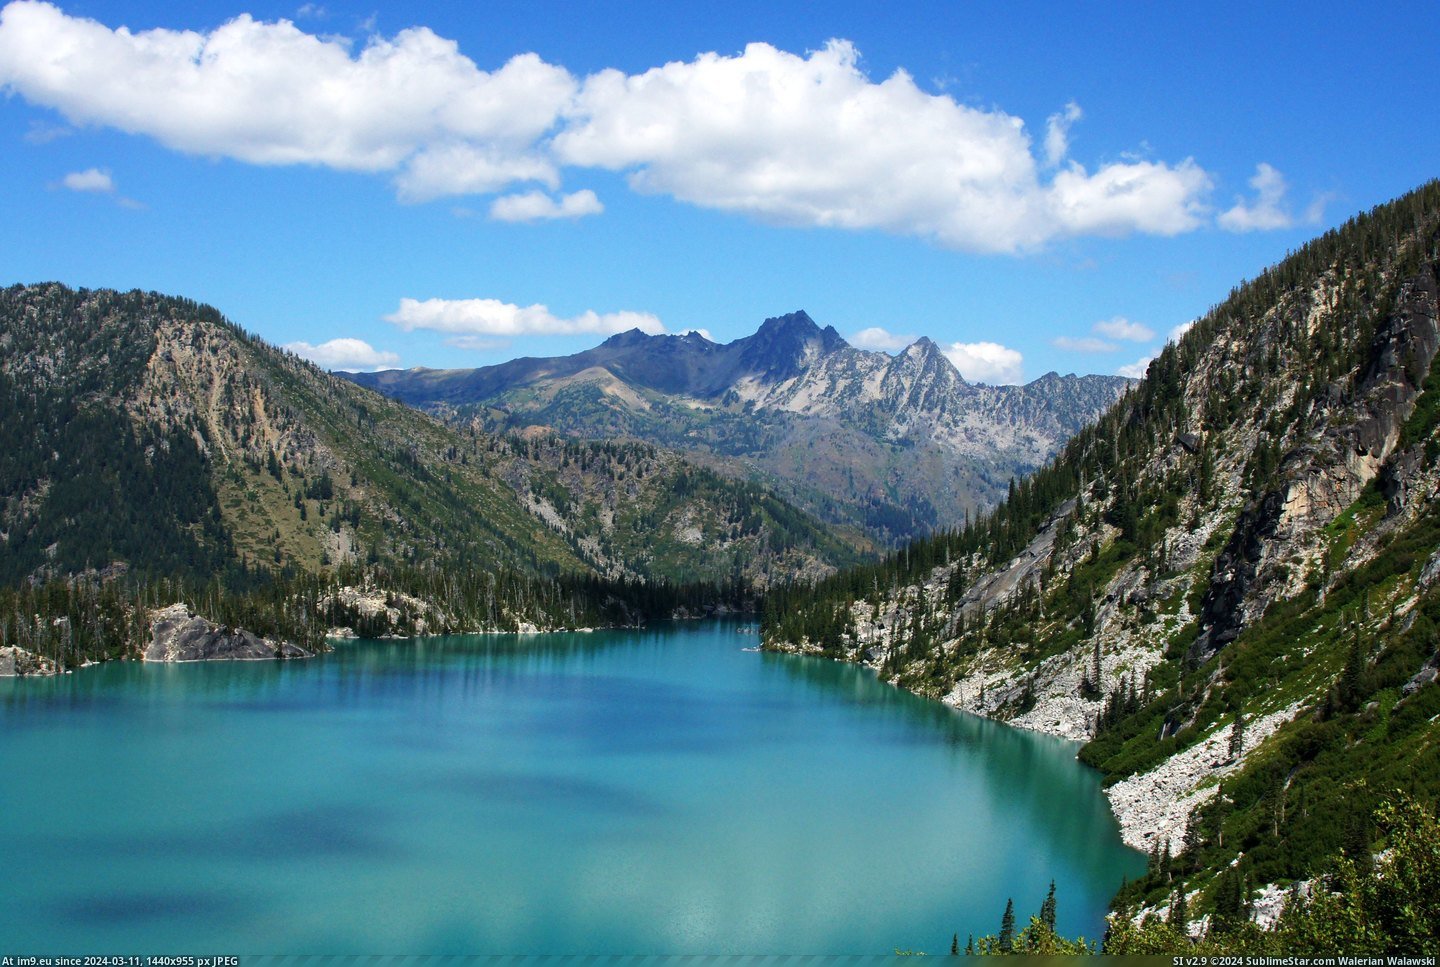 #Lake #Washington #Leavenworth #Colchuck #Waters #Turquoise [Earthporn] The turquoise waters of Colchuck Lake, near Leavenworth Washington [4592x3056] [oc] Pic. (Bild von album My r/EARTHPORN favs))